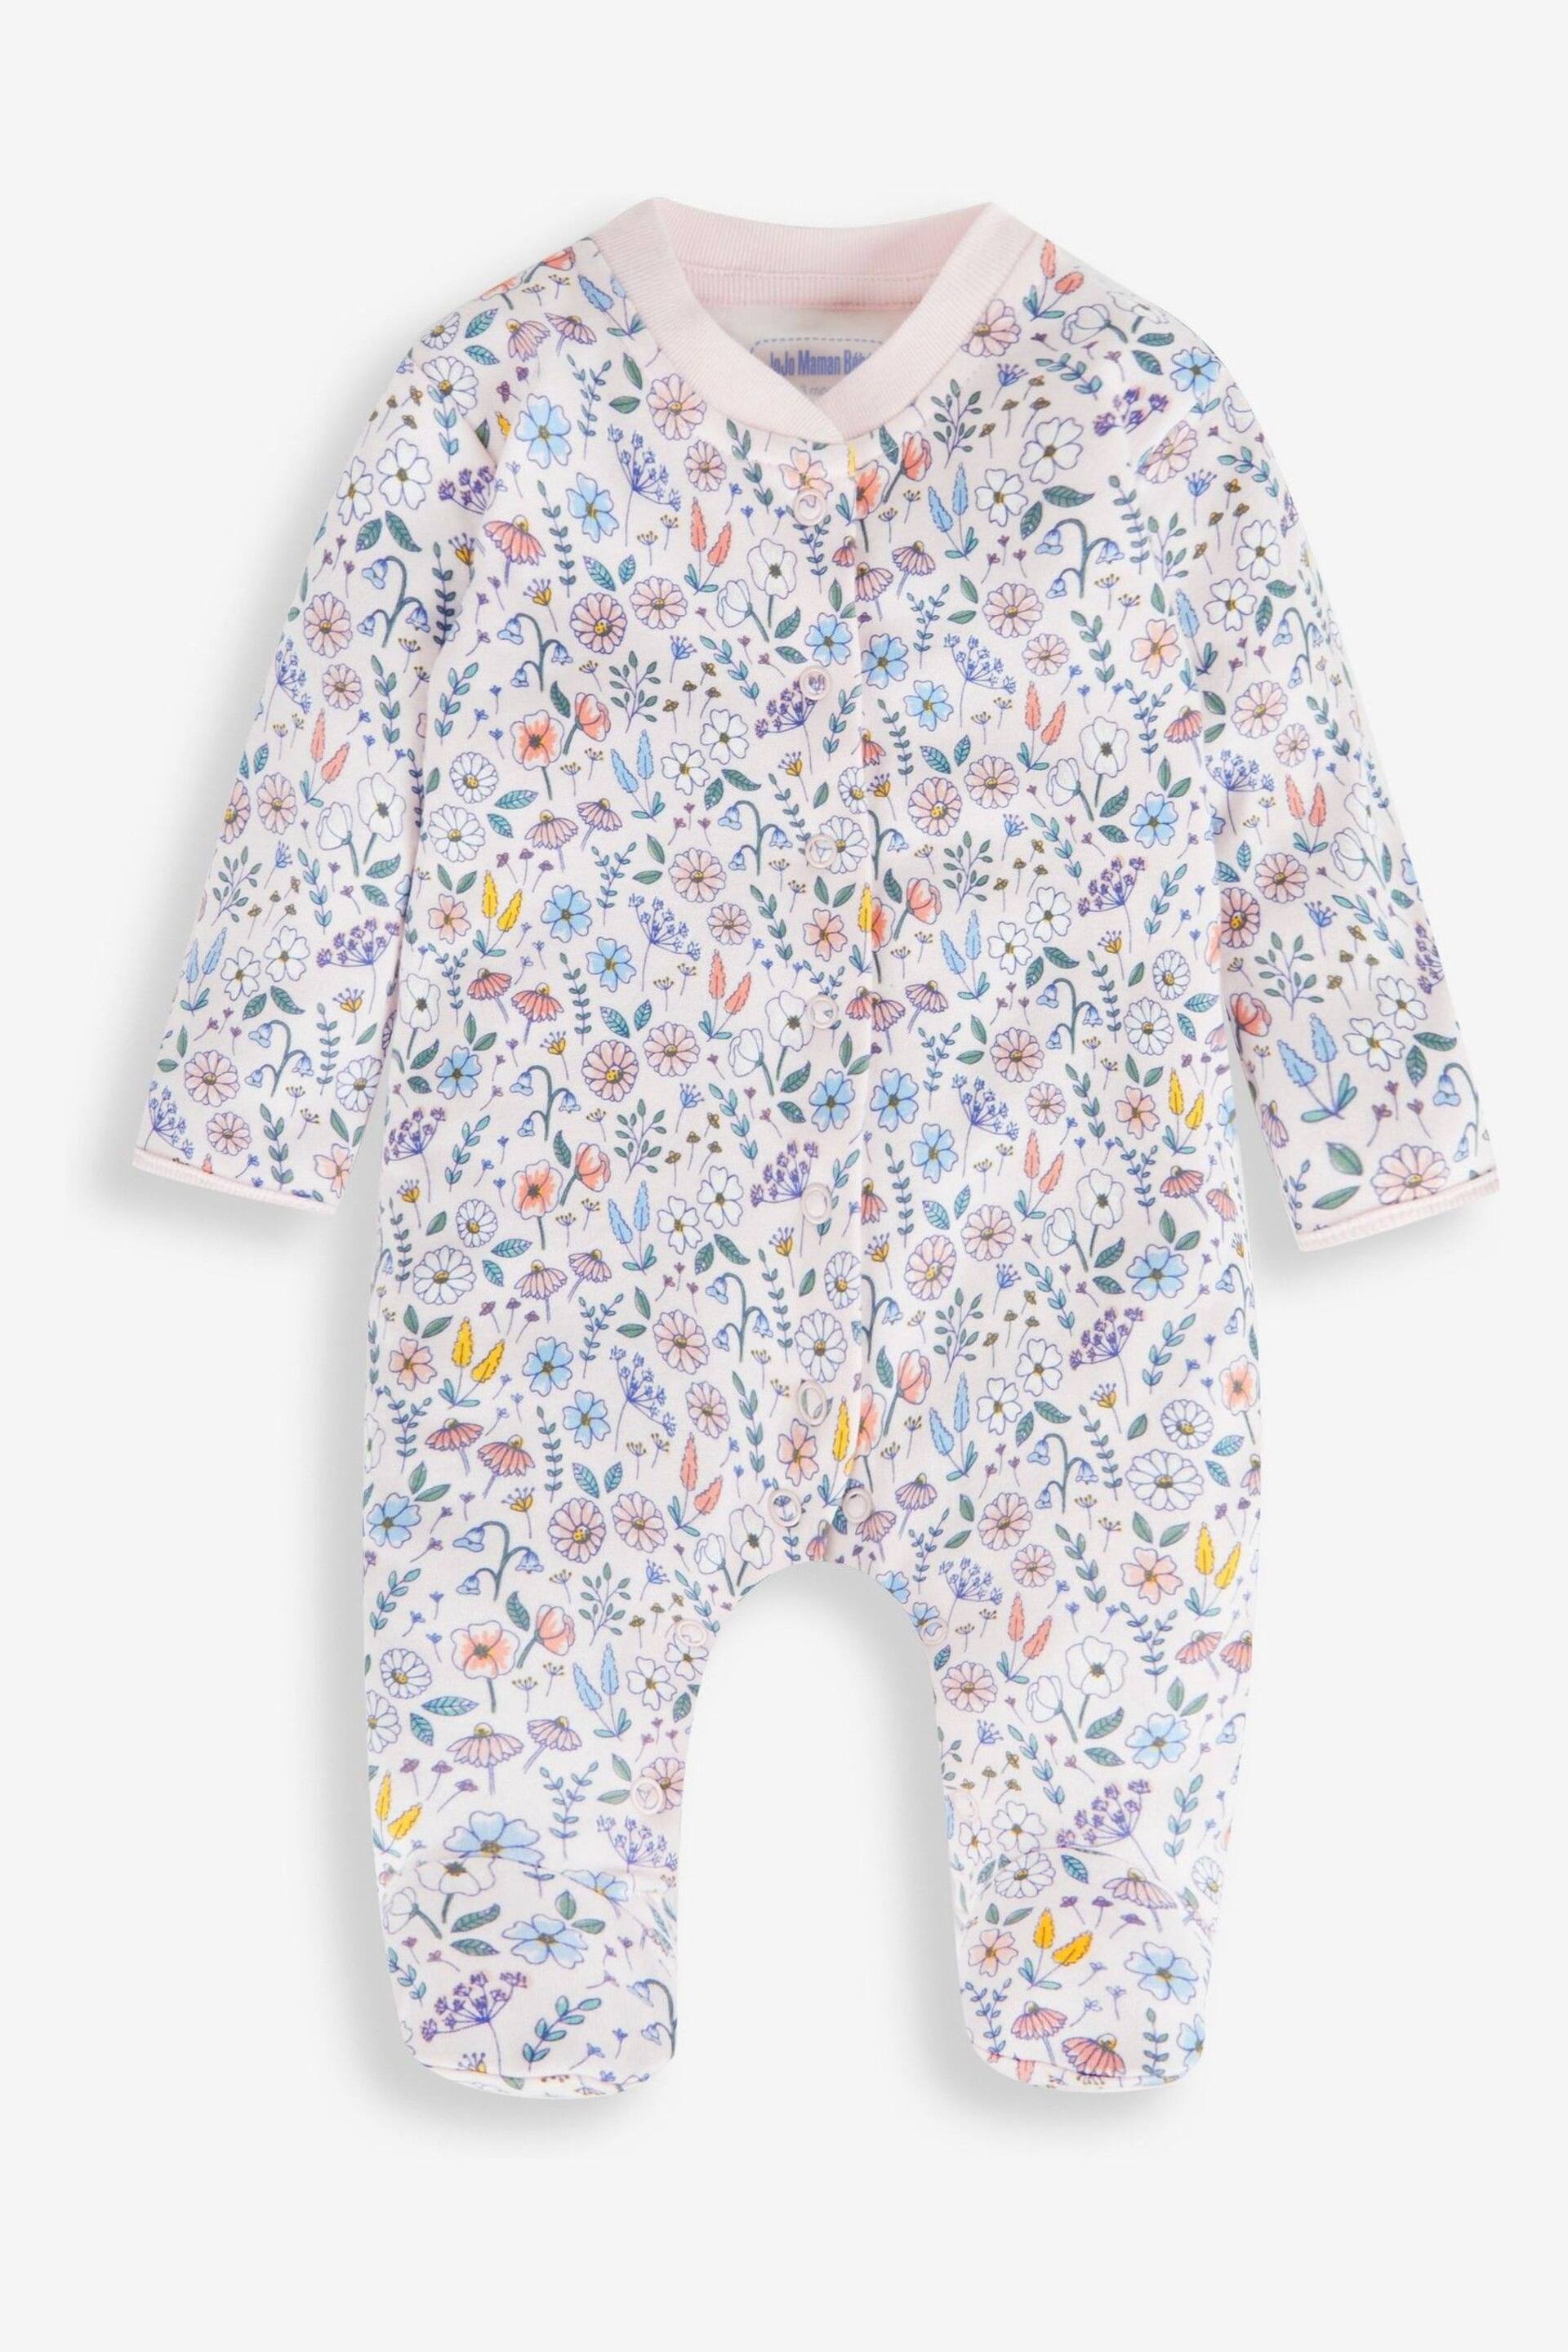 JoJo Maman Bébé Pink Floral 2-Piece Baby Sleepsuit & Velour Jacket Set - Image 6 of 9